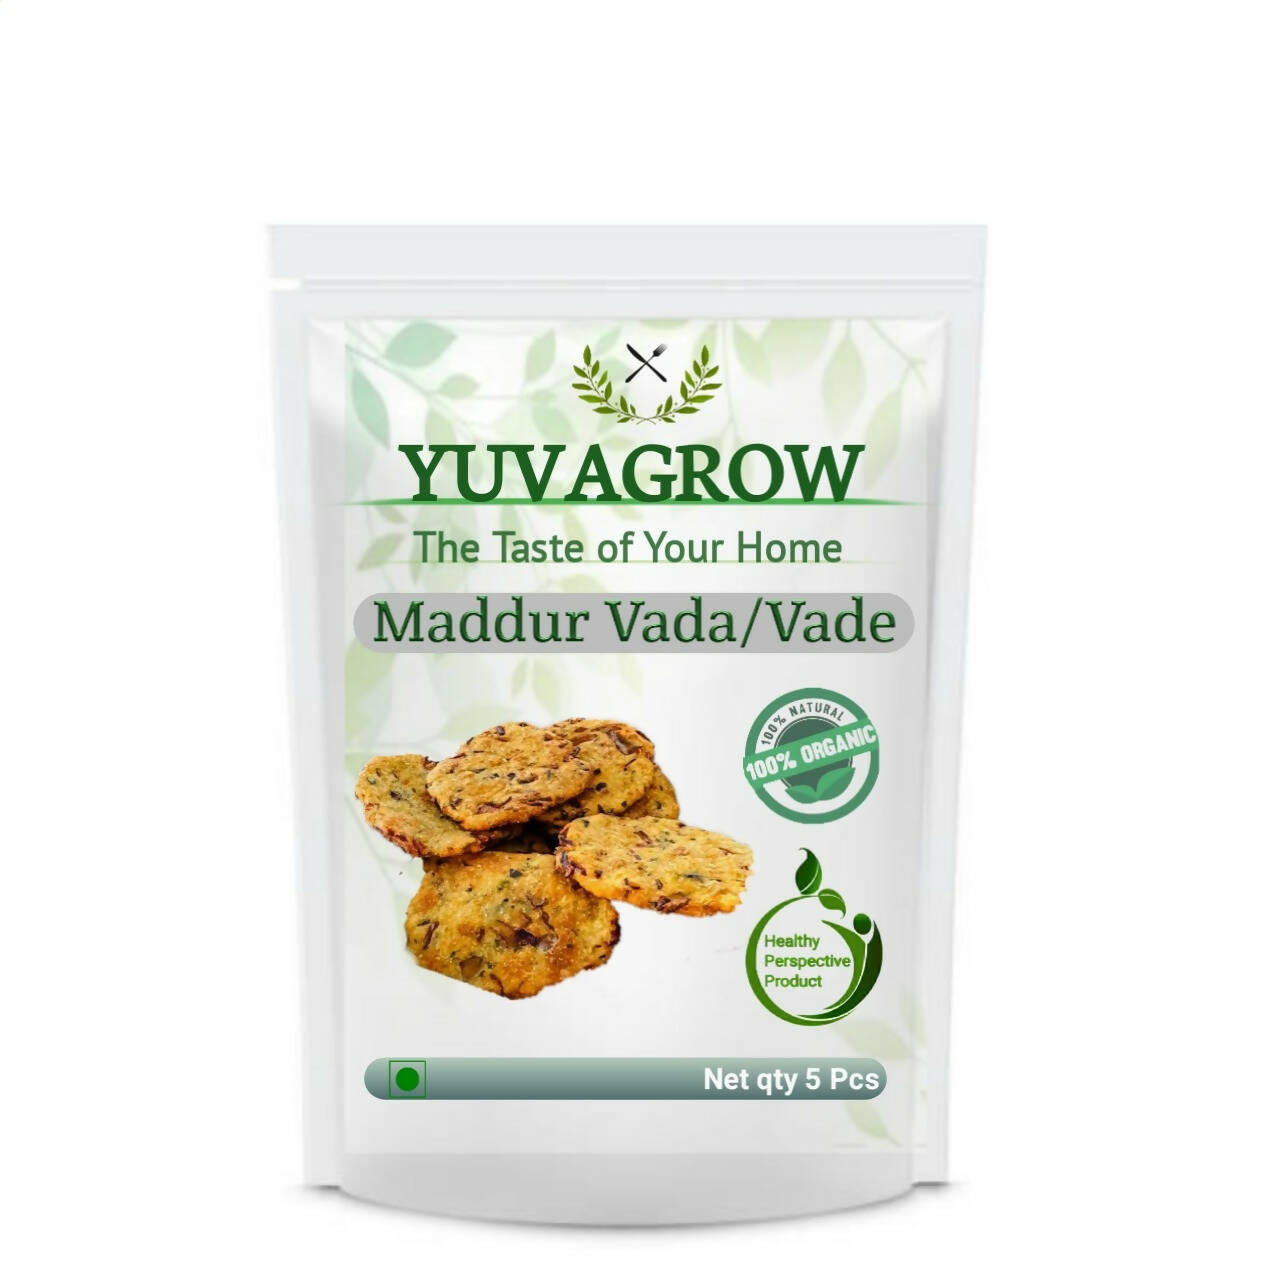 Yuvagrow Maddur Vada / Vade - buy in USA, Australia, Canada